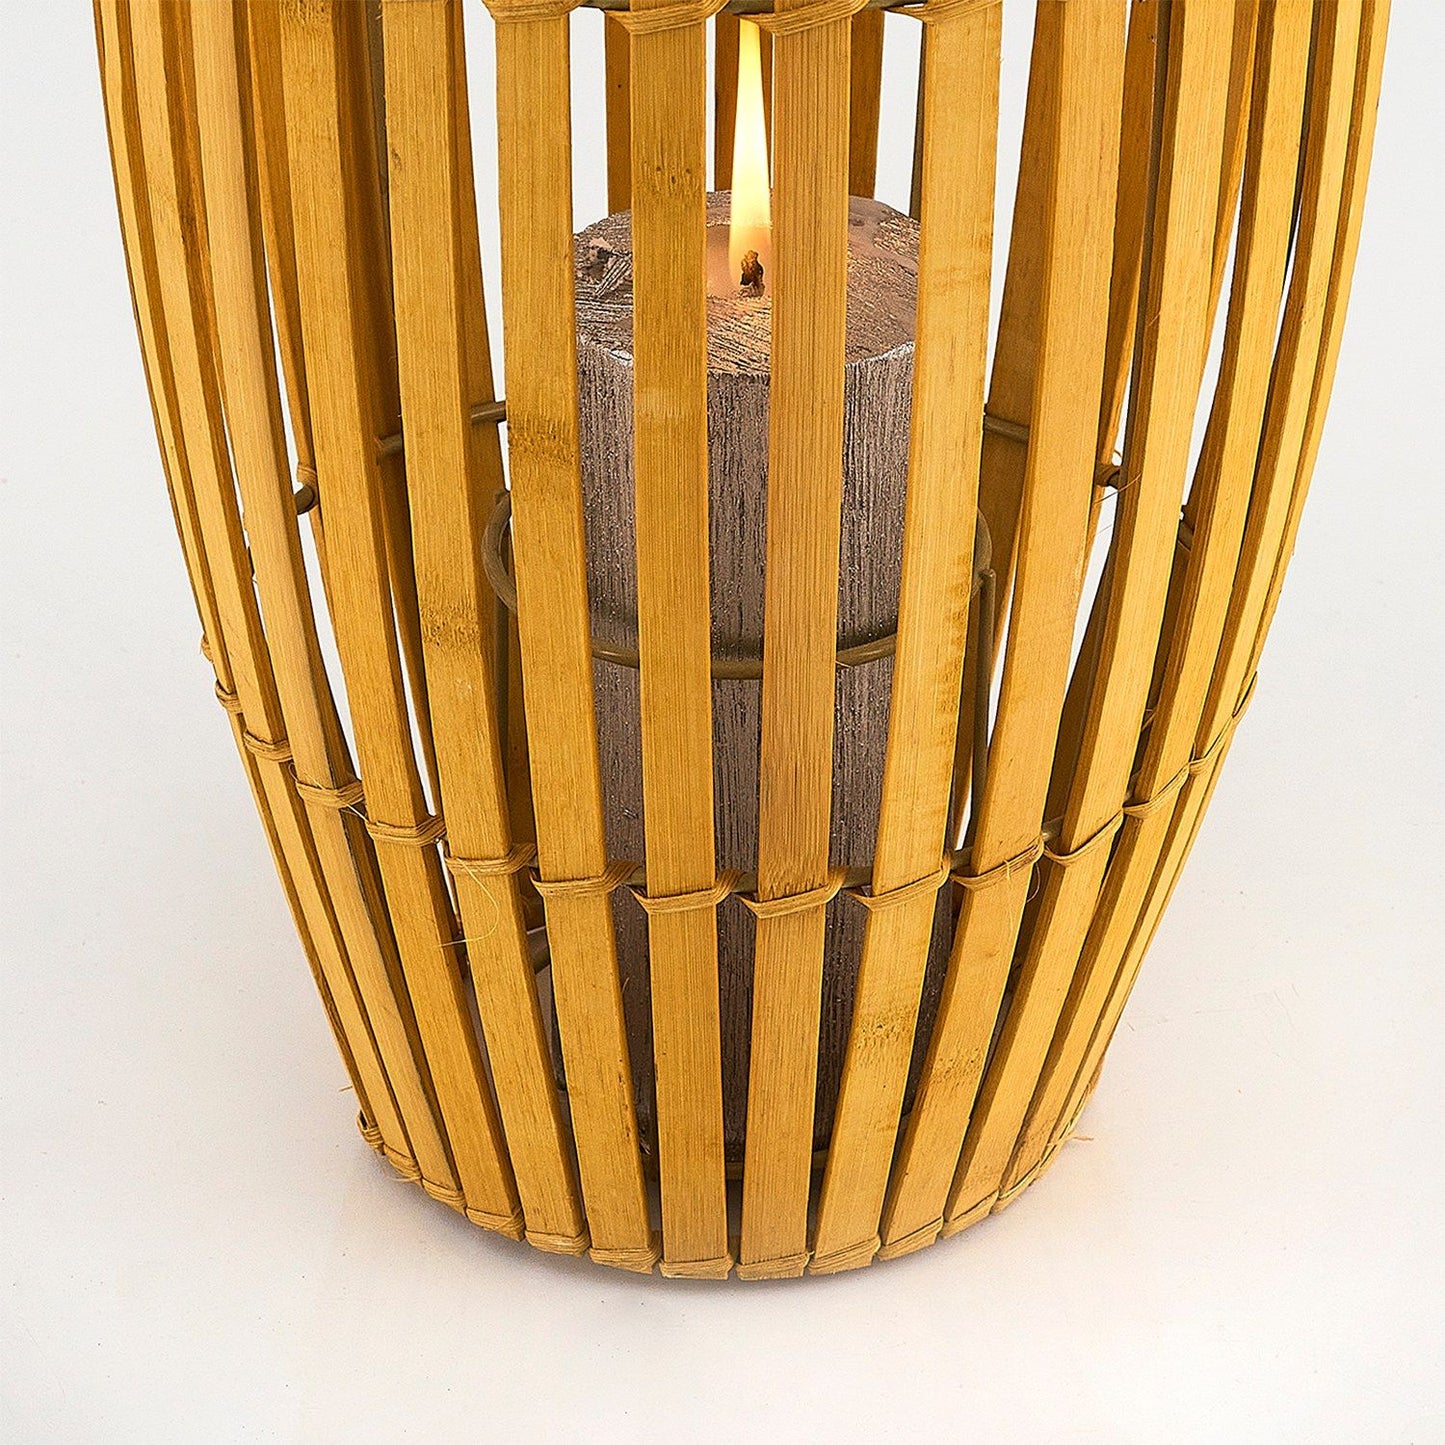 Cova small bambus lanterne